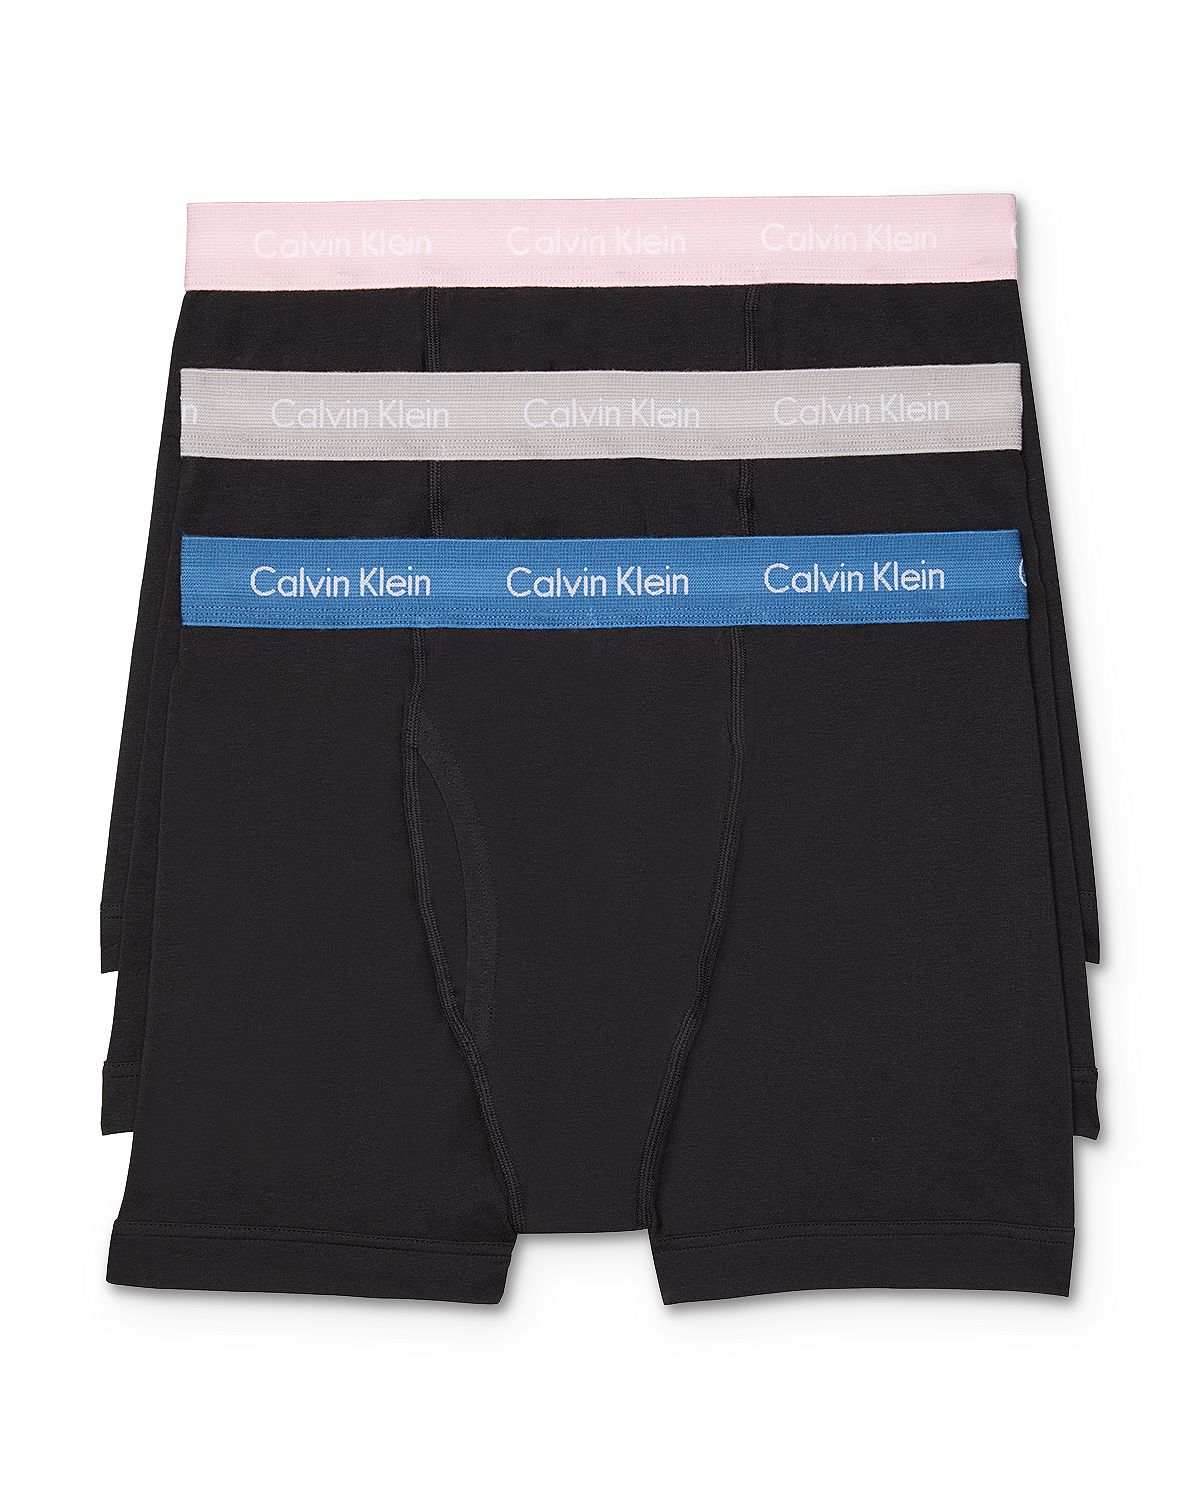 Calvin Klein Cotton Stretch Boxer Briefs Pack Of 3 Black/Gray/Pink/Blue